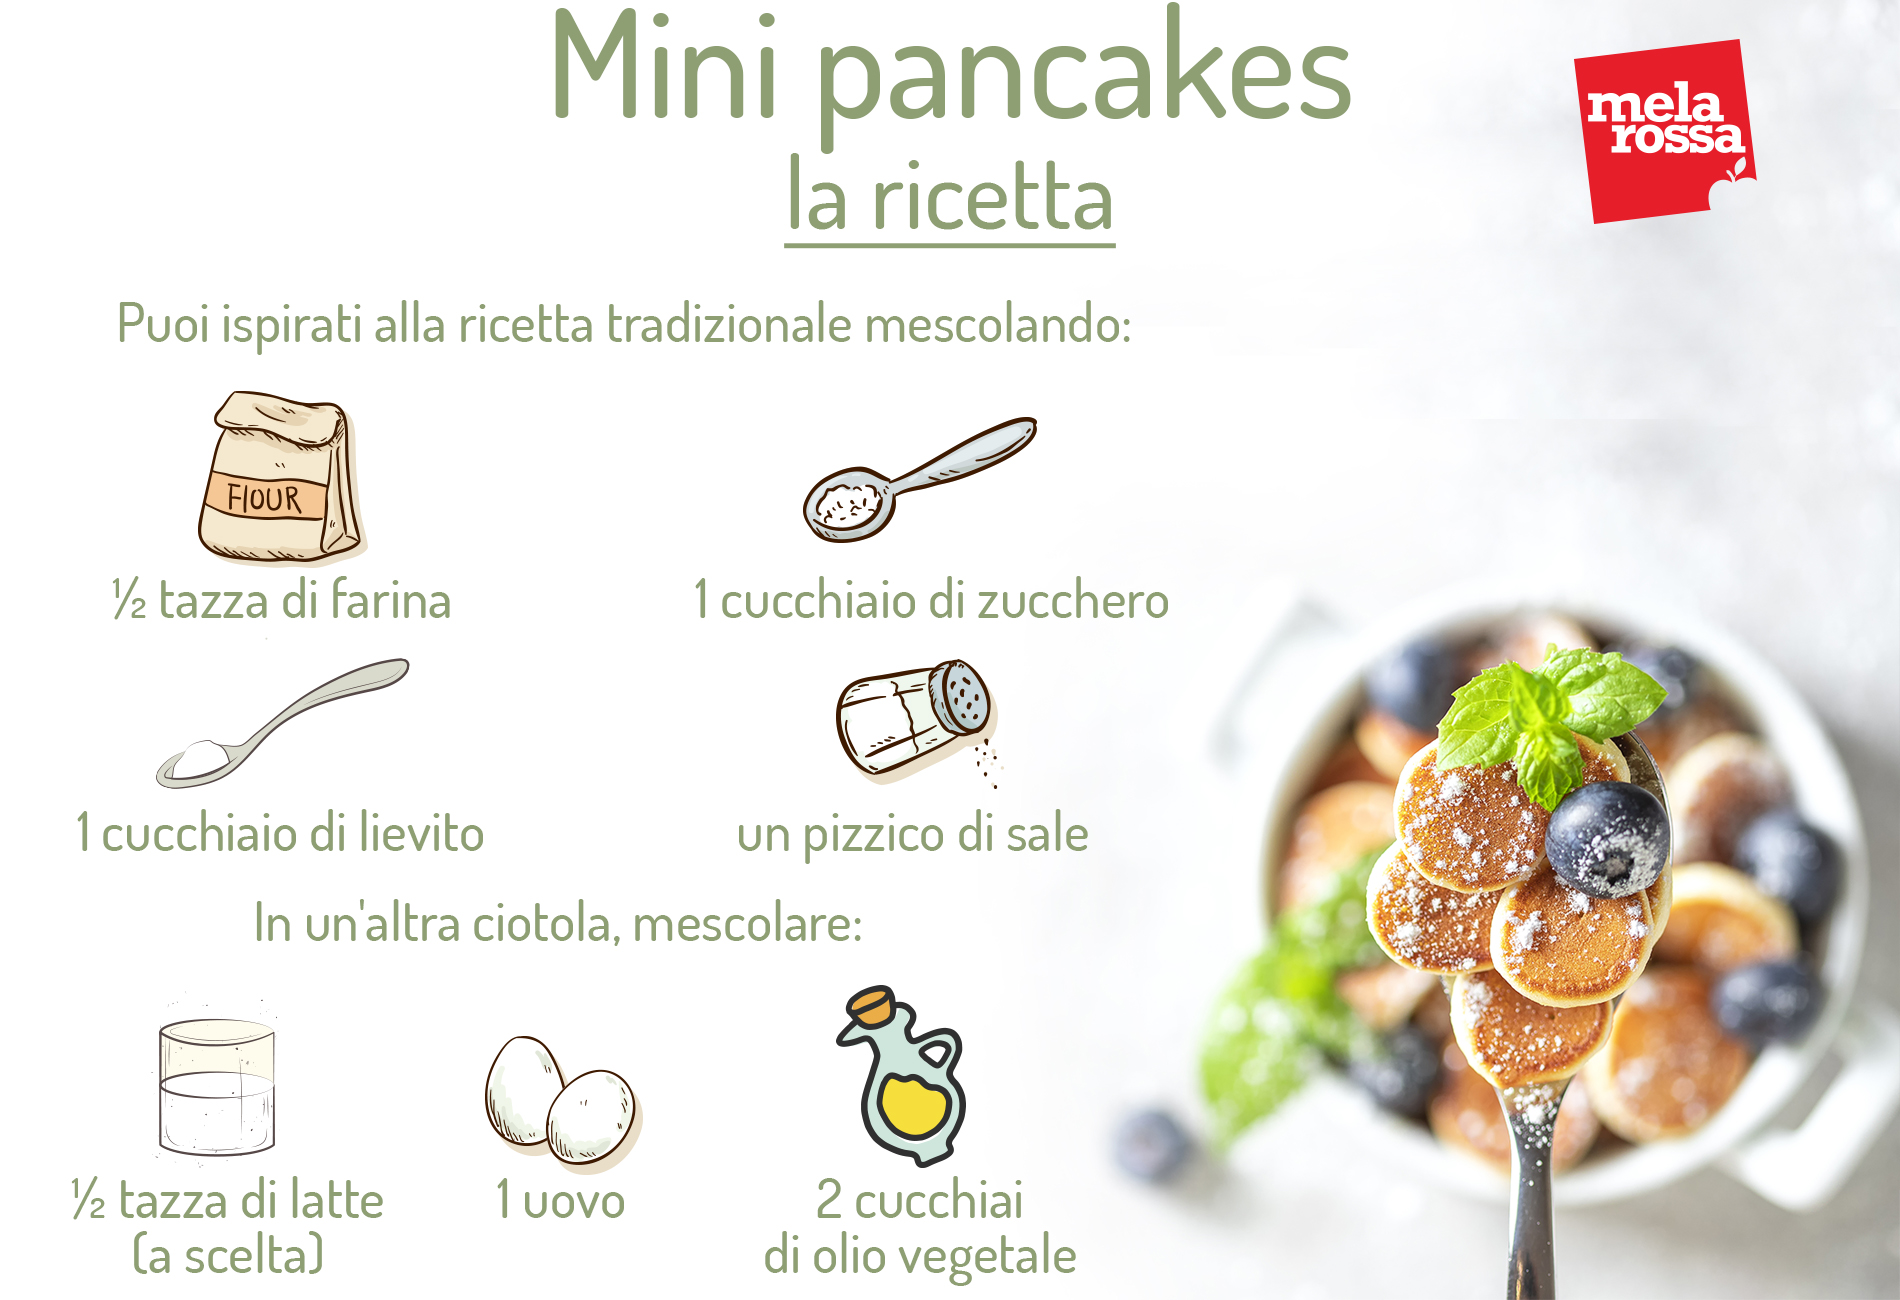 Mini pancakes: la ricetta